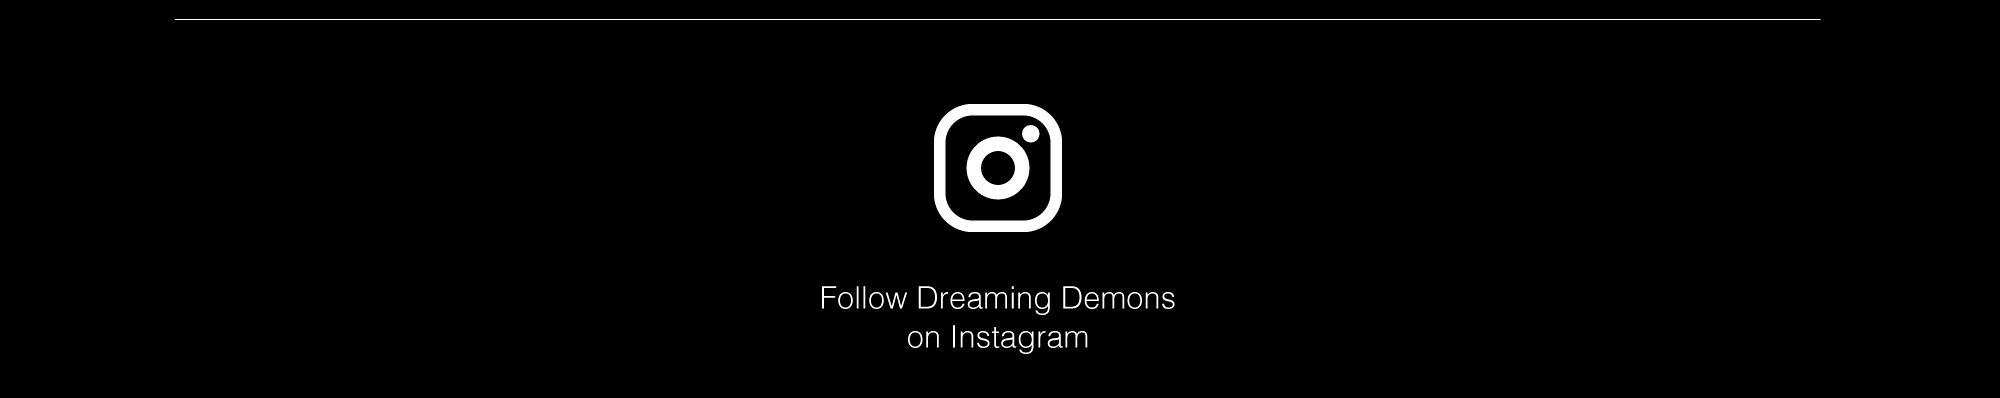 Follow Dreaming Demonson Instagram